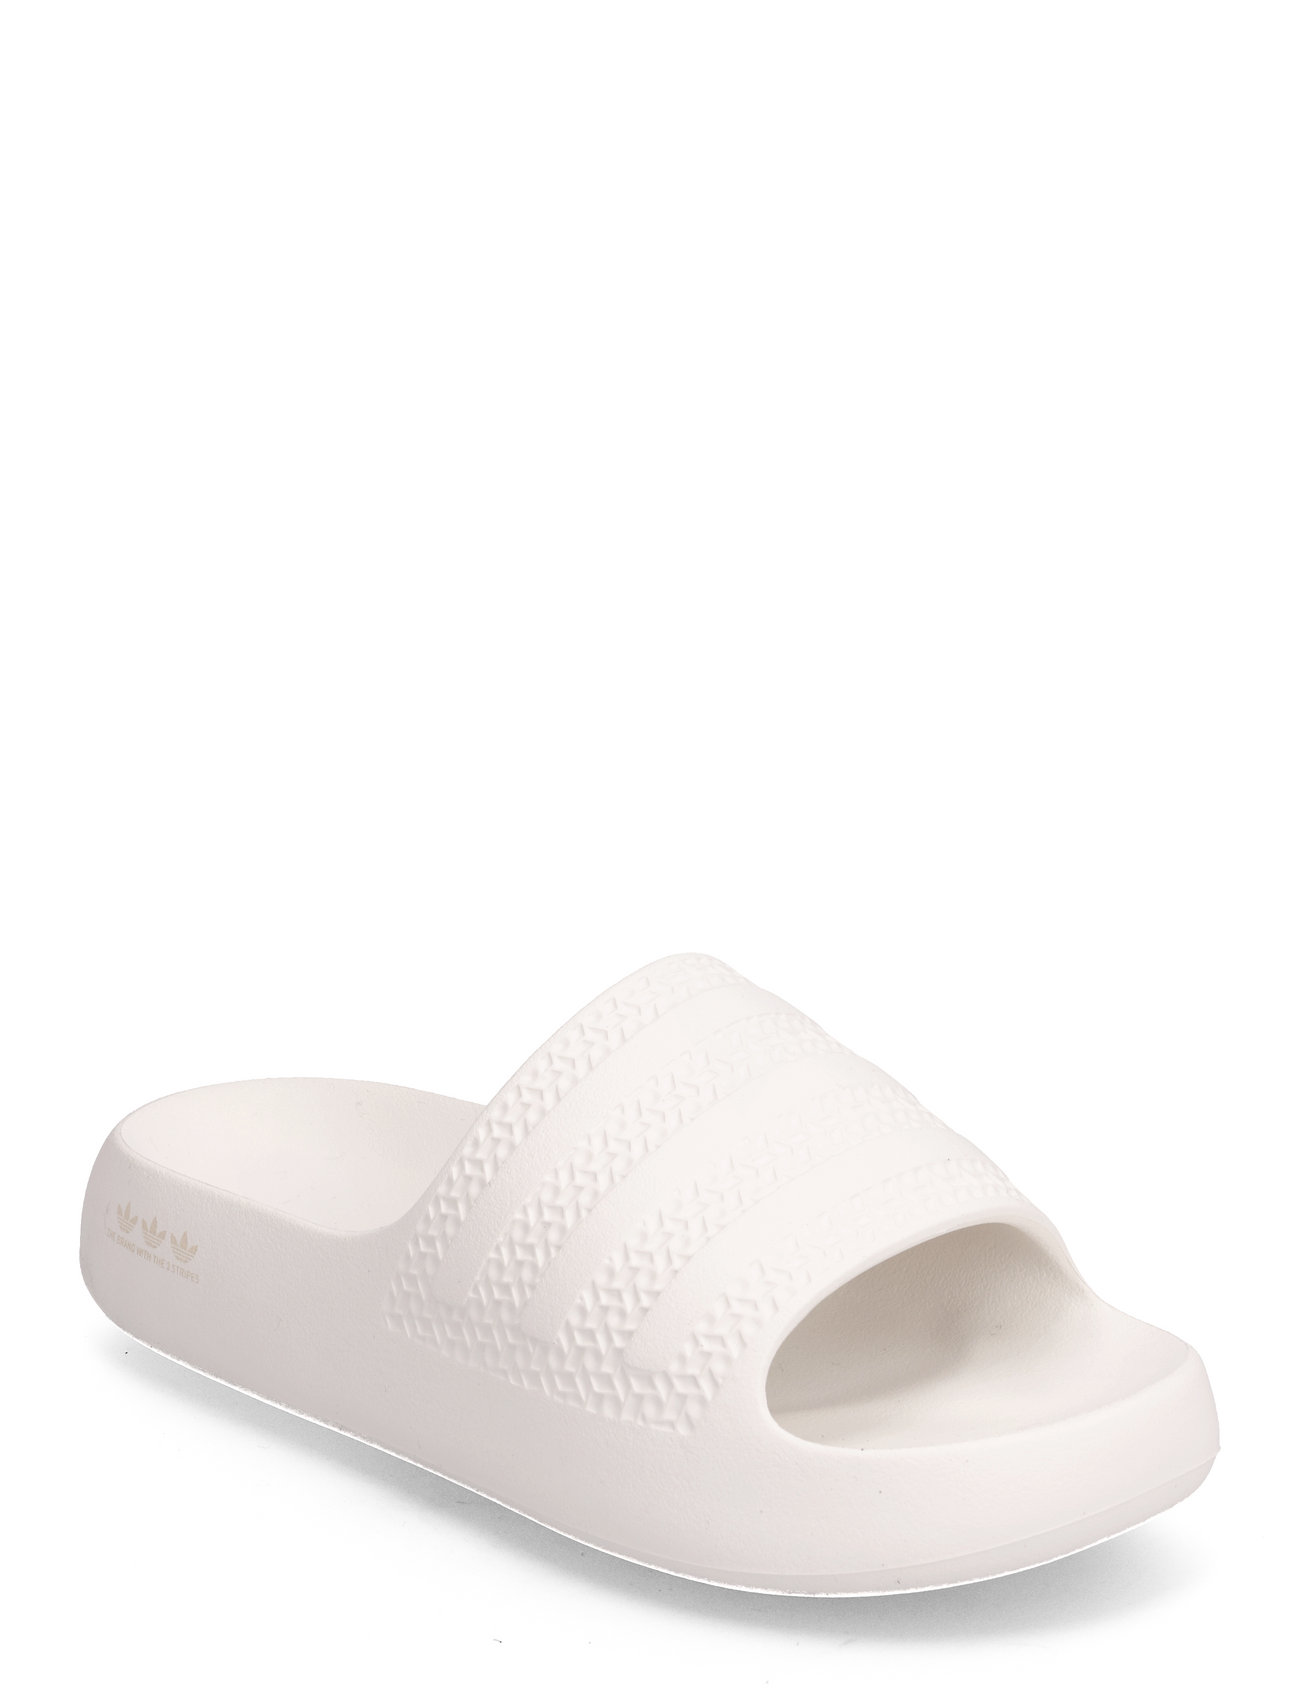 Adilette Ayoon Slides Sport Summer Shoes Sandals Pool Sliders White Adidas Originals